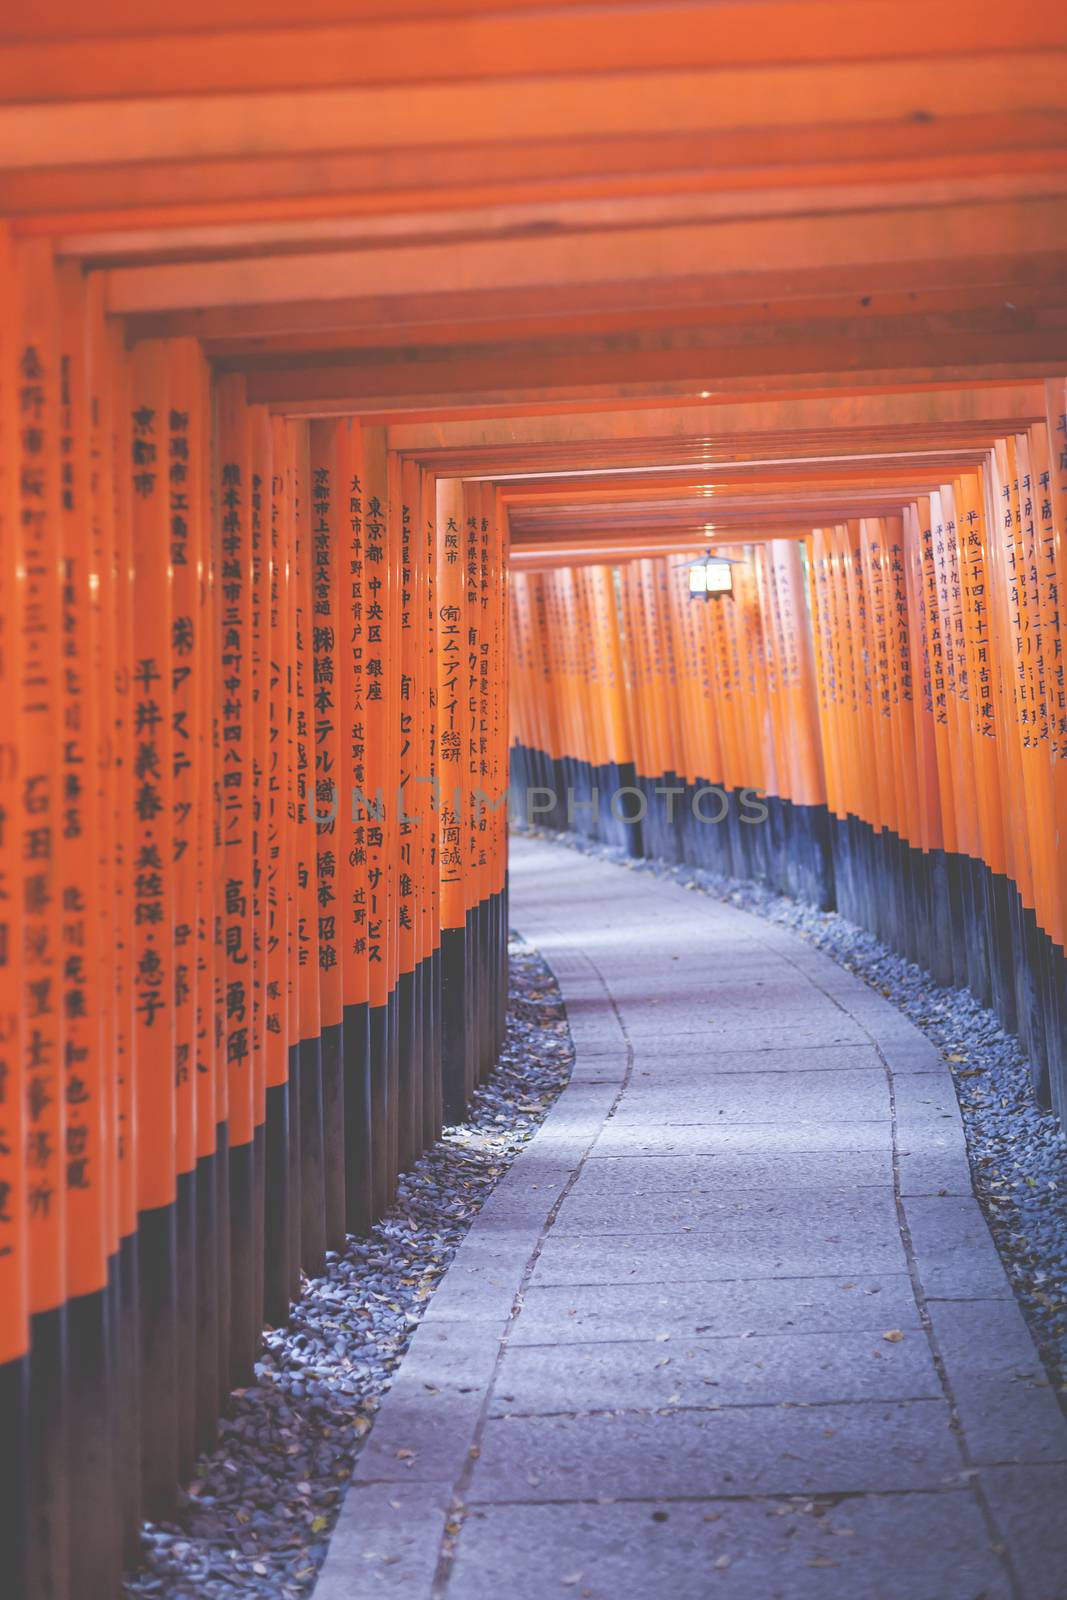 Fushimi Inari Taisha Shrine in Kyoto, Japan

